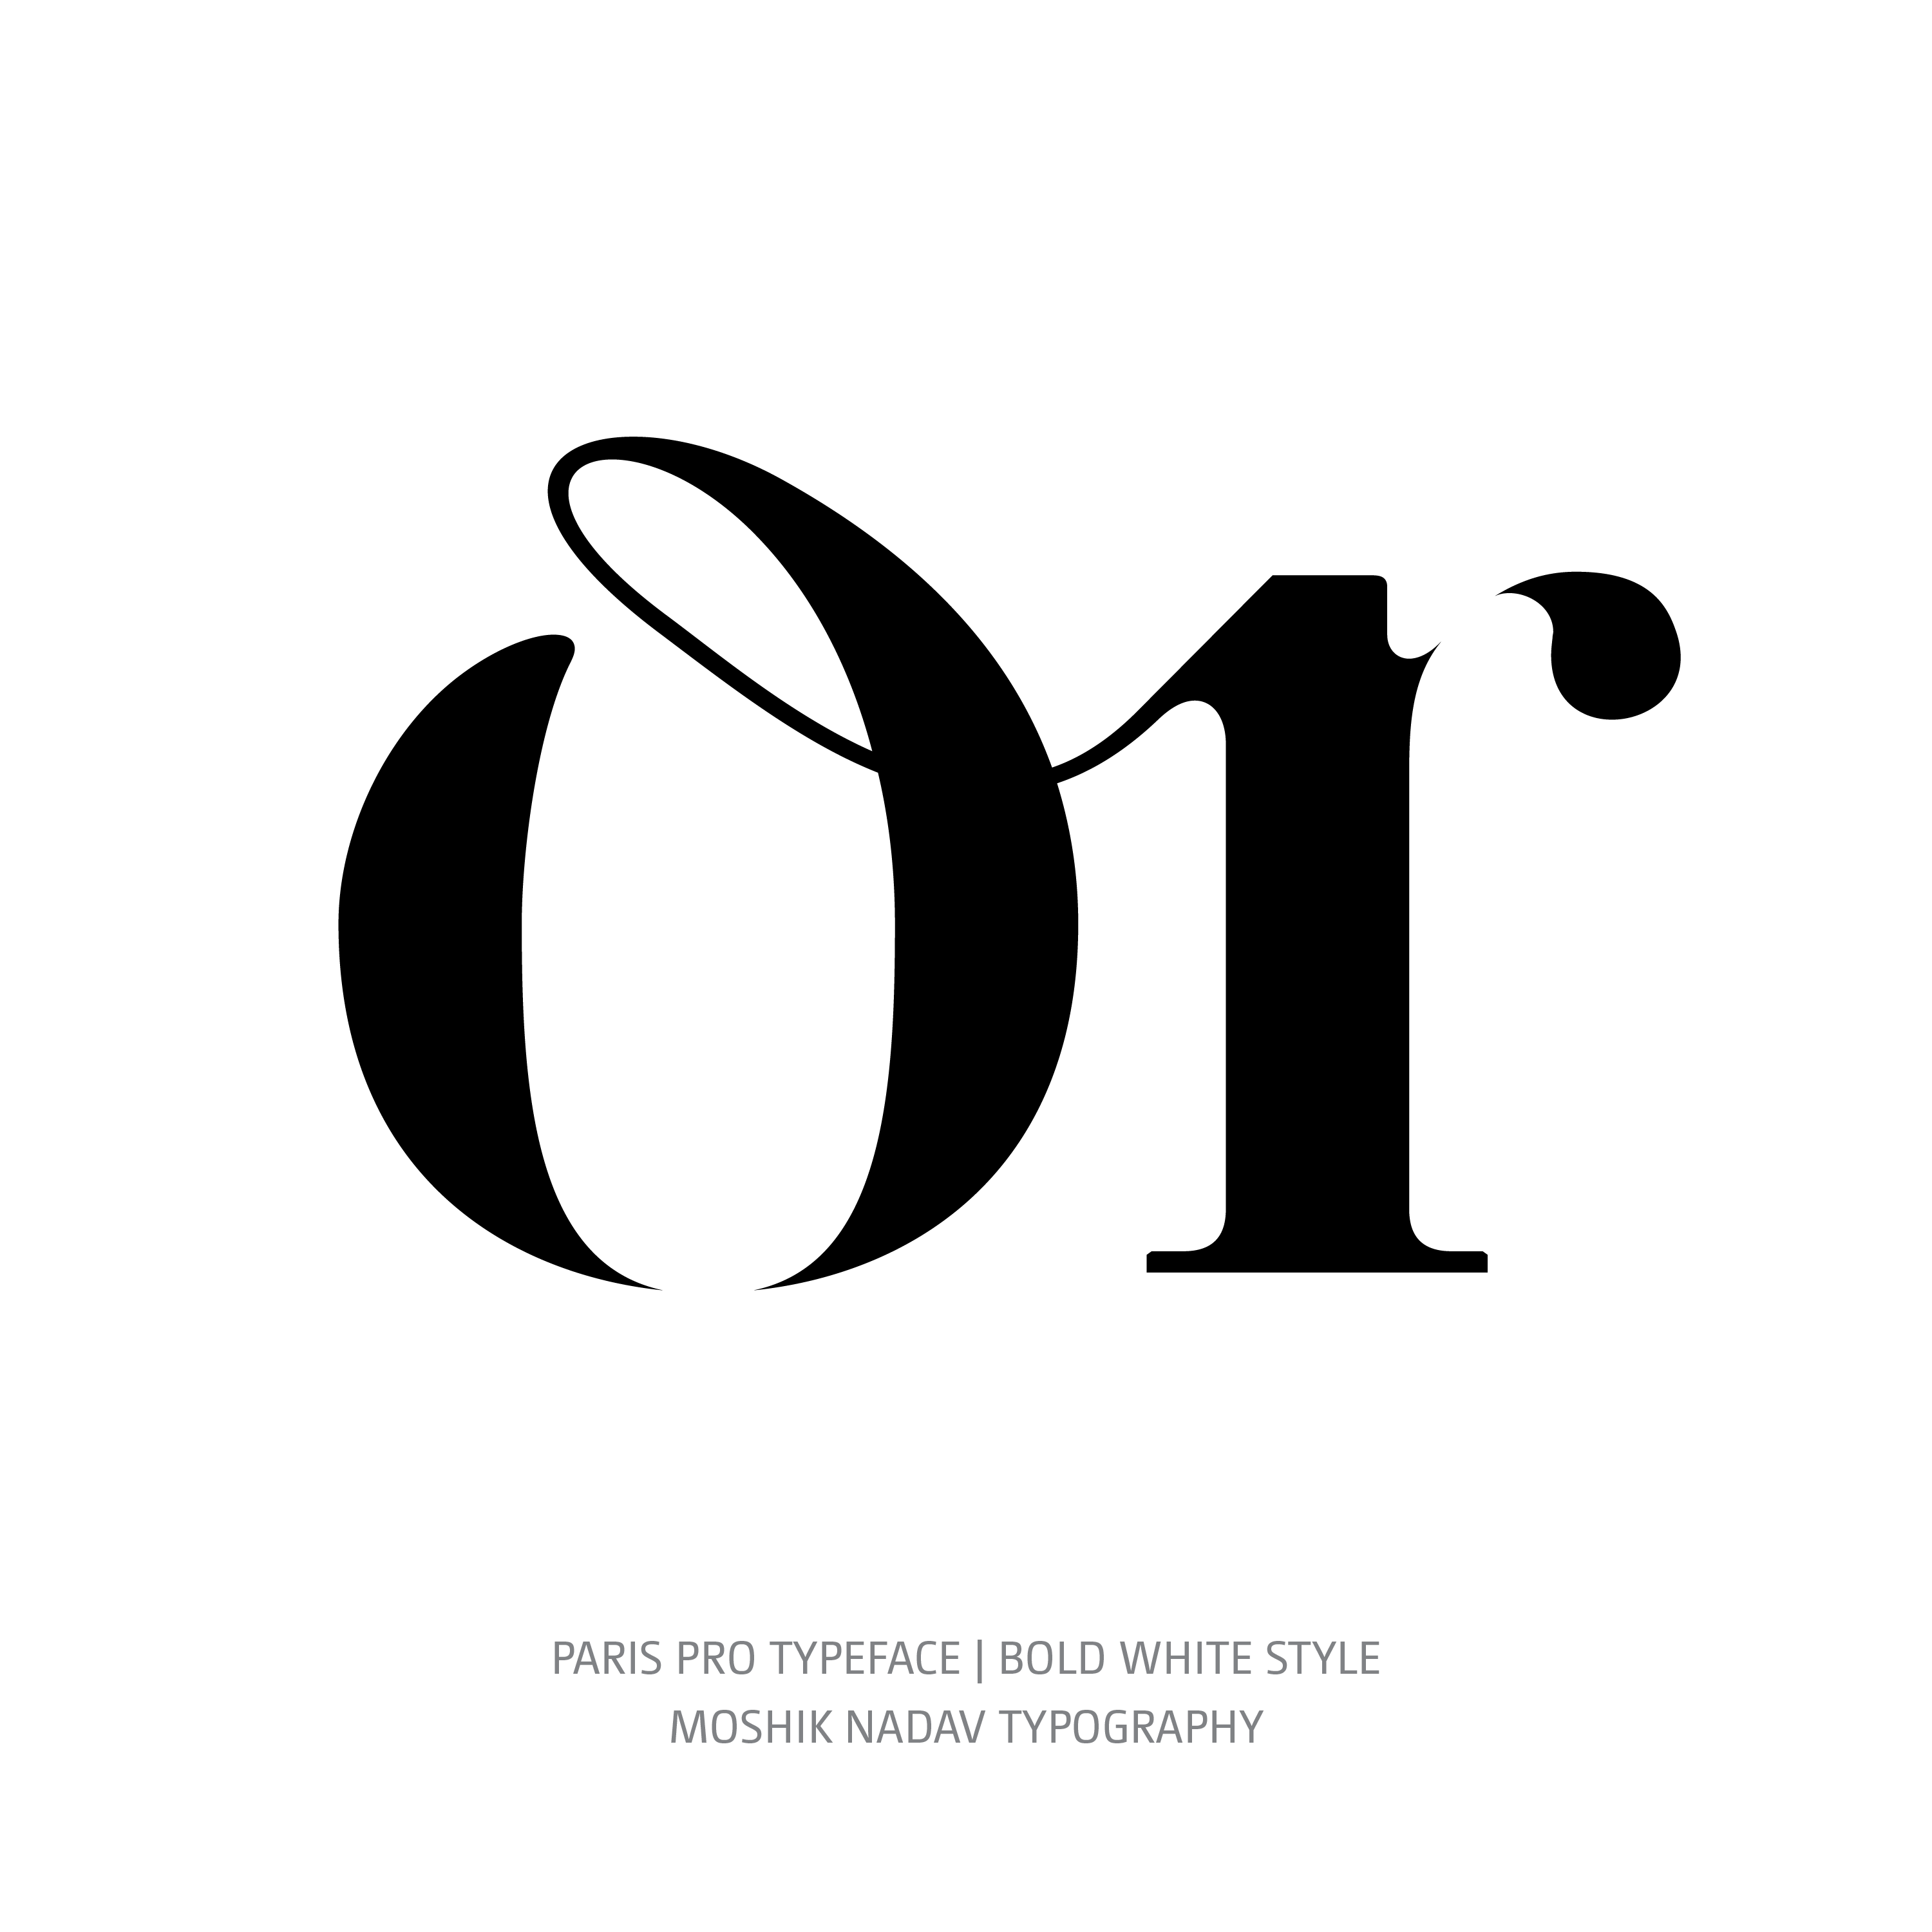 Paris Pro Typeface Bold White or ligature